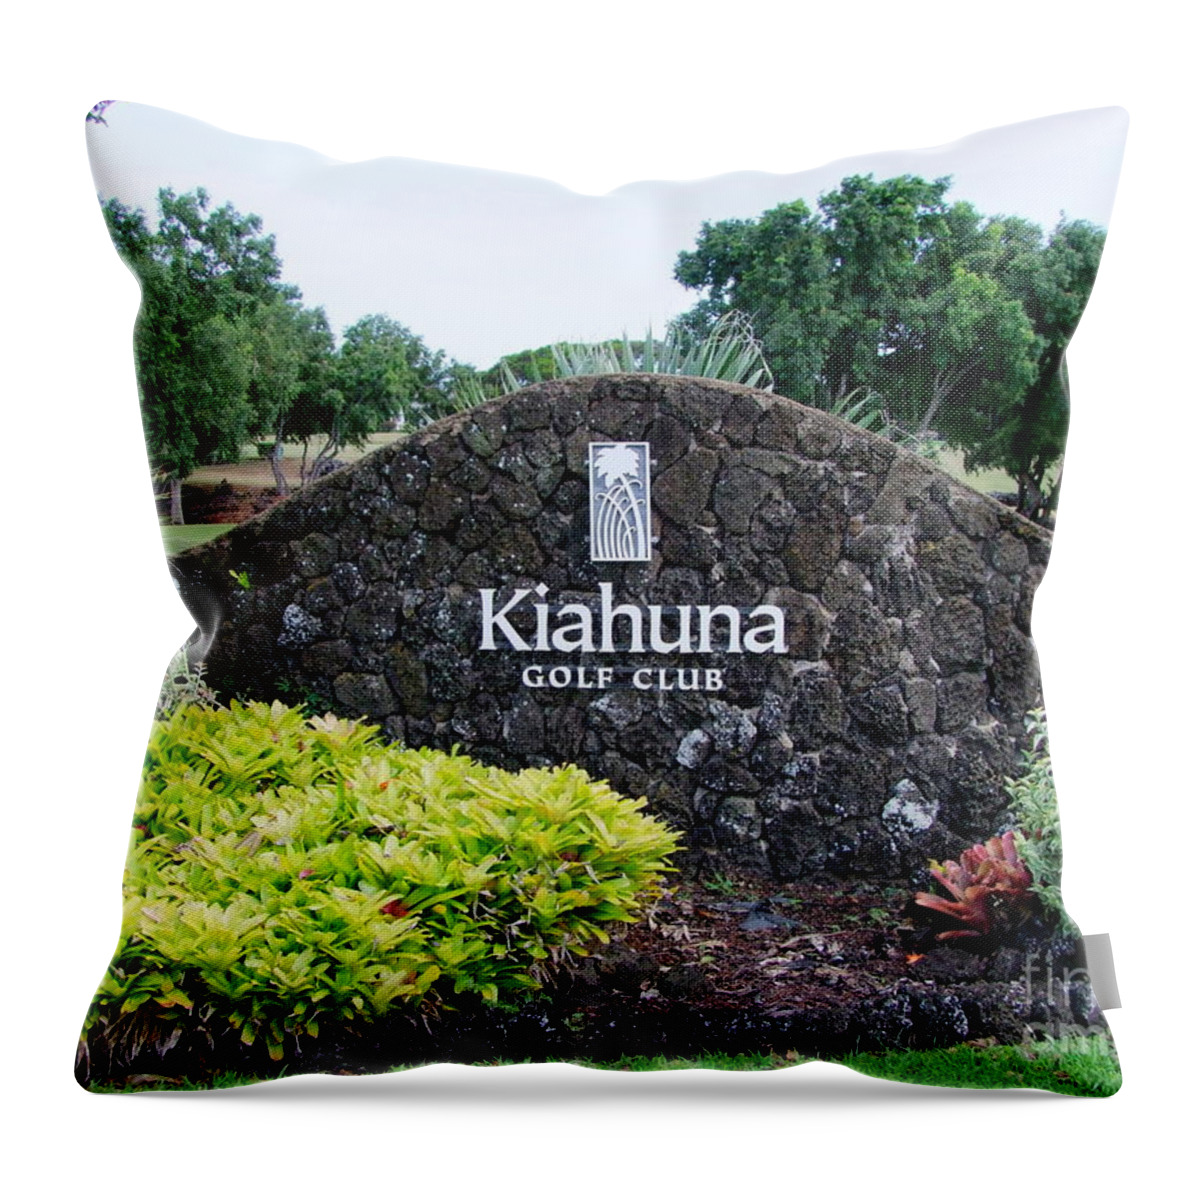 Mary Deal Throw Pillow featuring the photograph Kiahuna Golf Club by Mary Deal